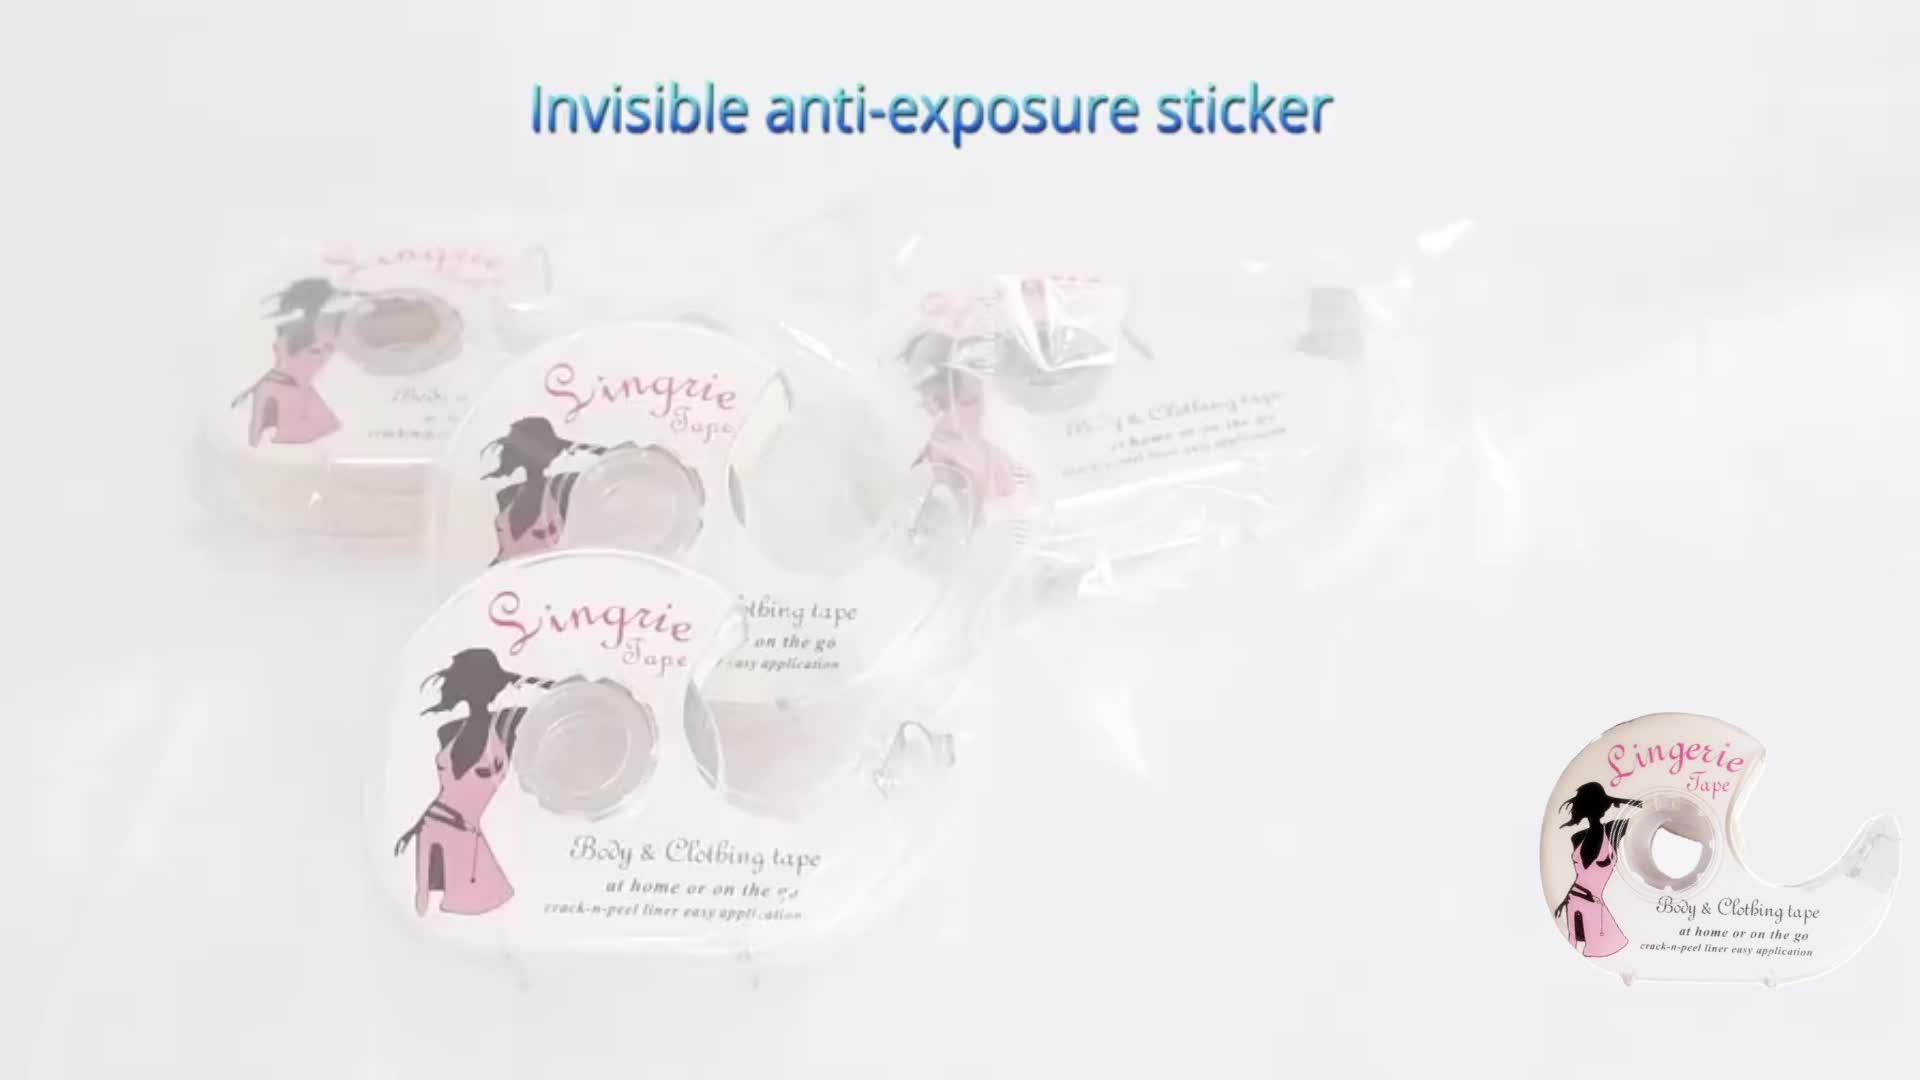 Double Sided Adhesive Bra Tape Seamless Invisible Non slip - Temu